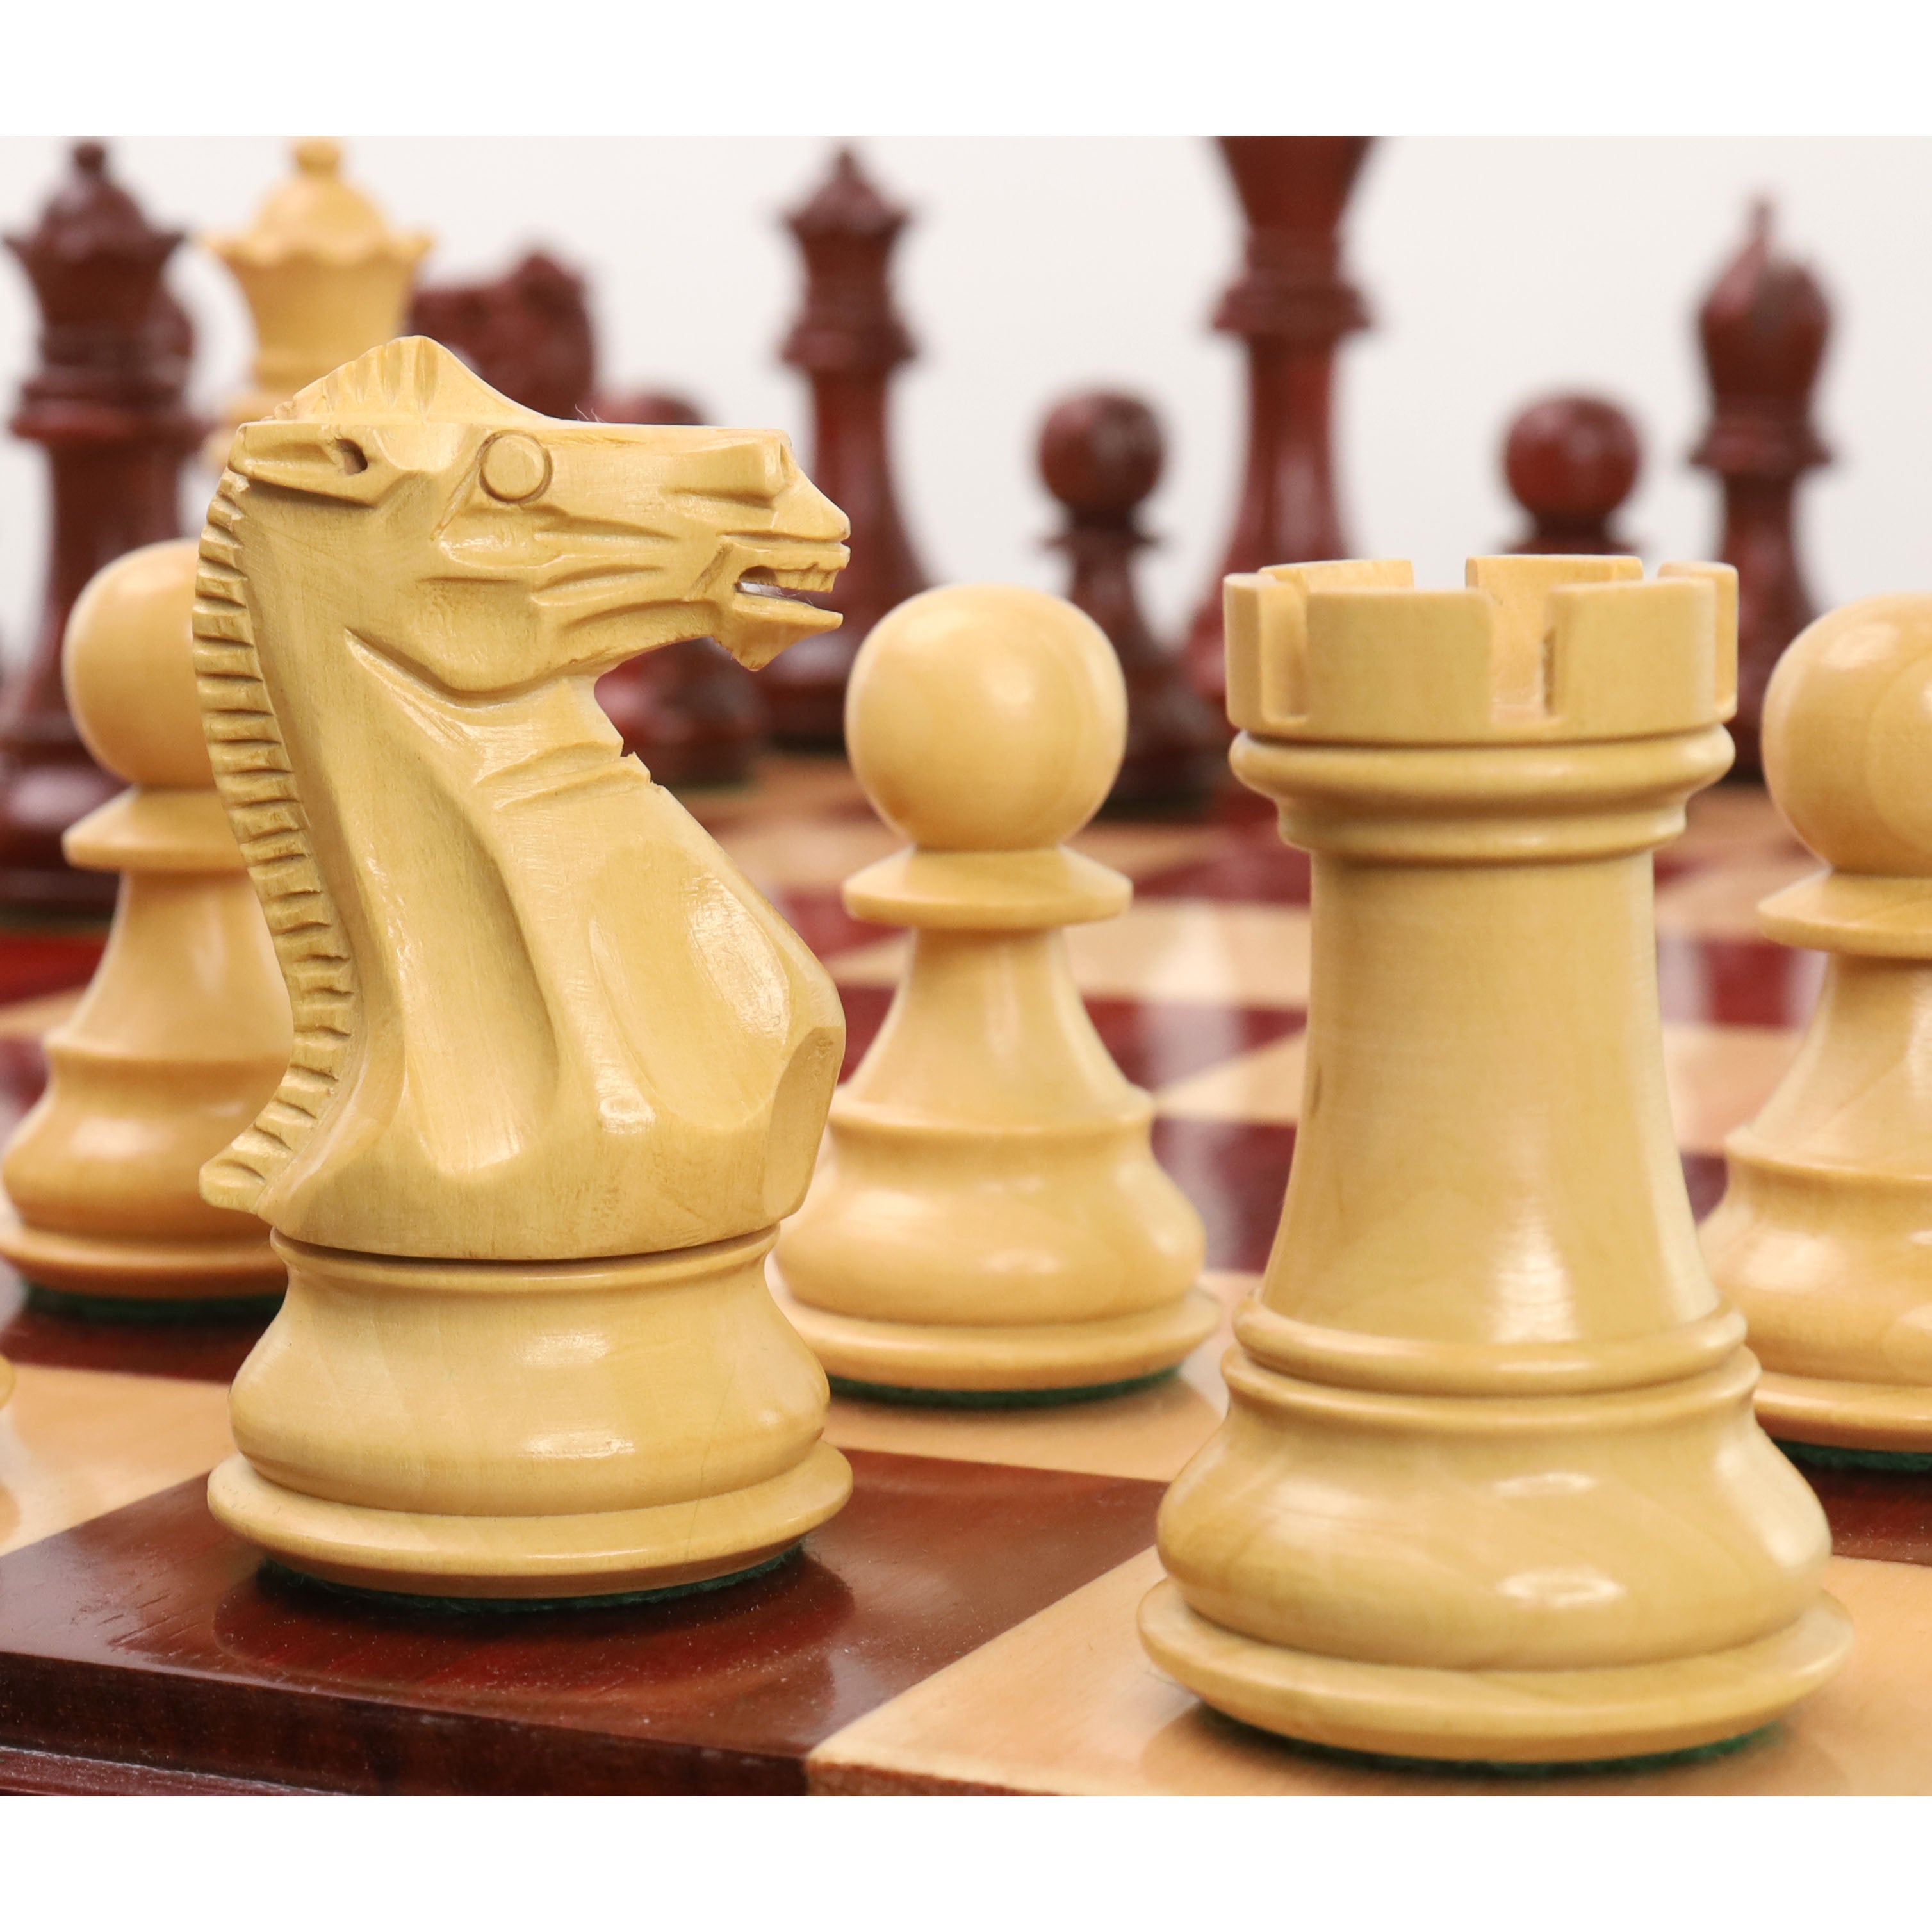 Wooden Chess Set Unique Auto Correcting Design Pieces 10413